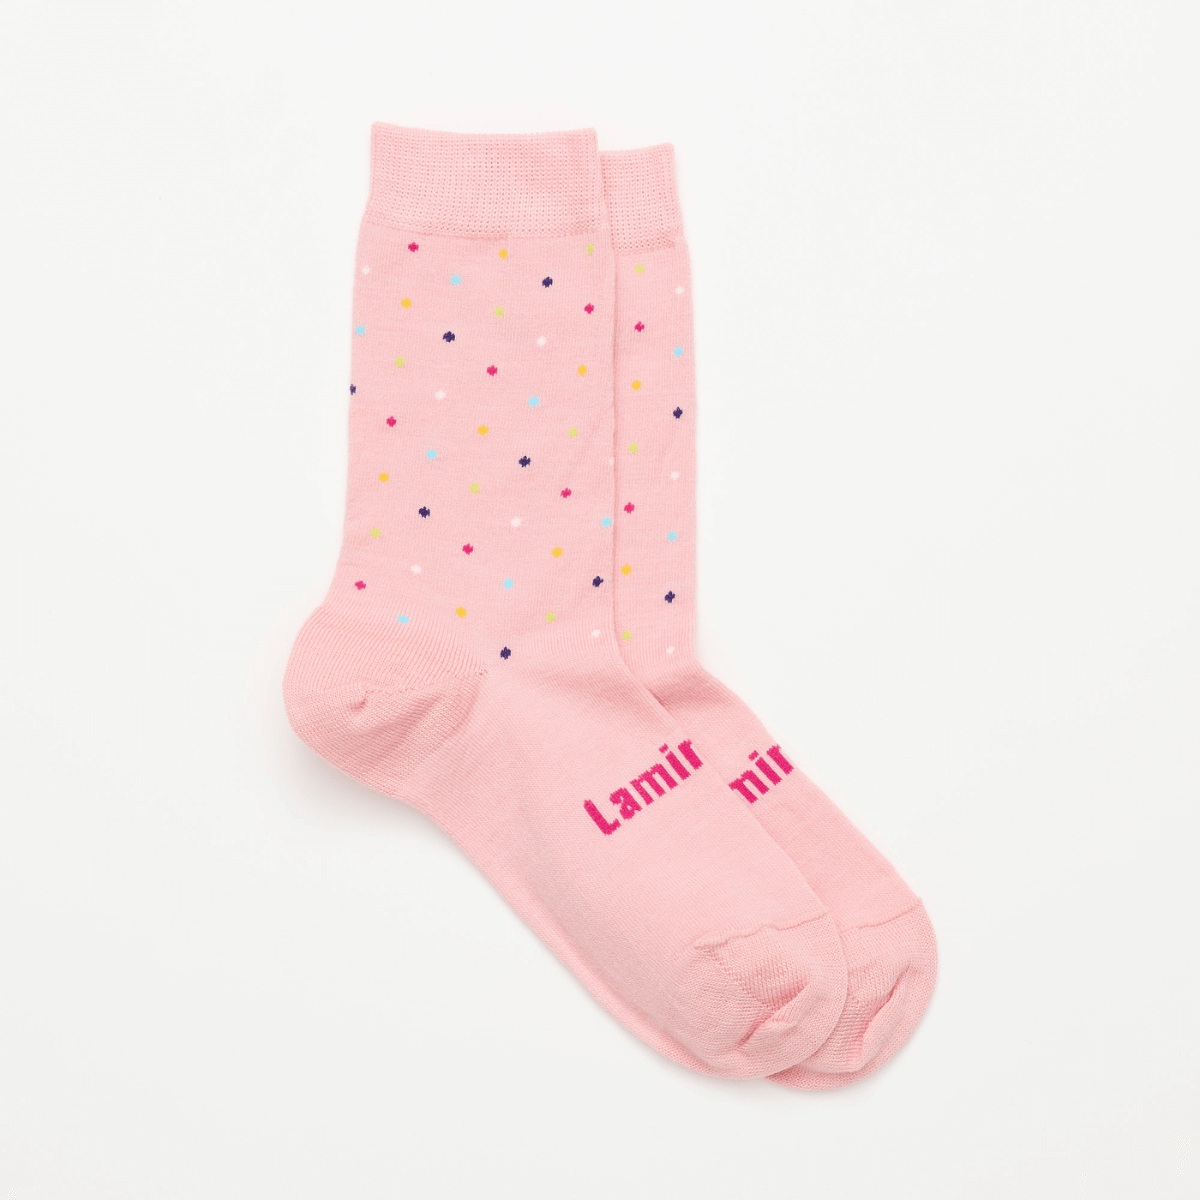 merino wool woman socks australia pink